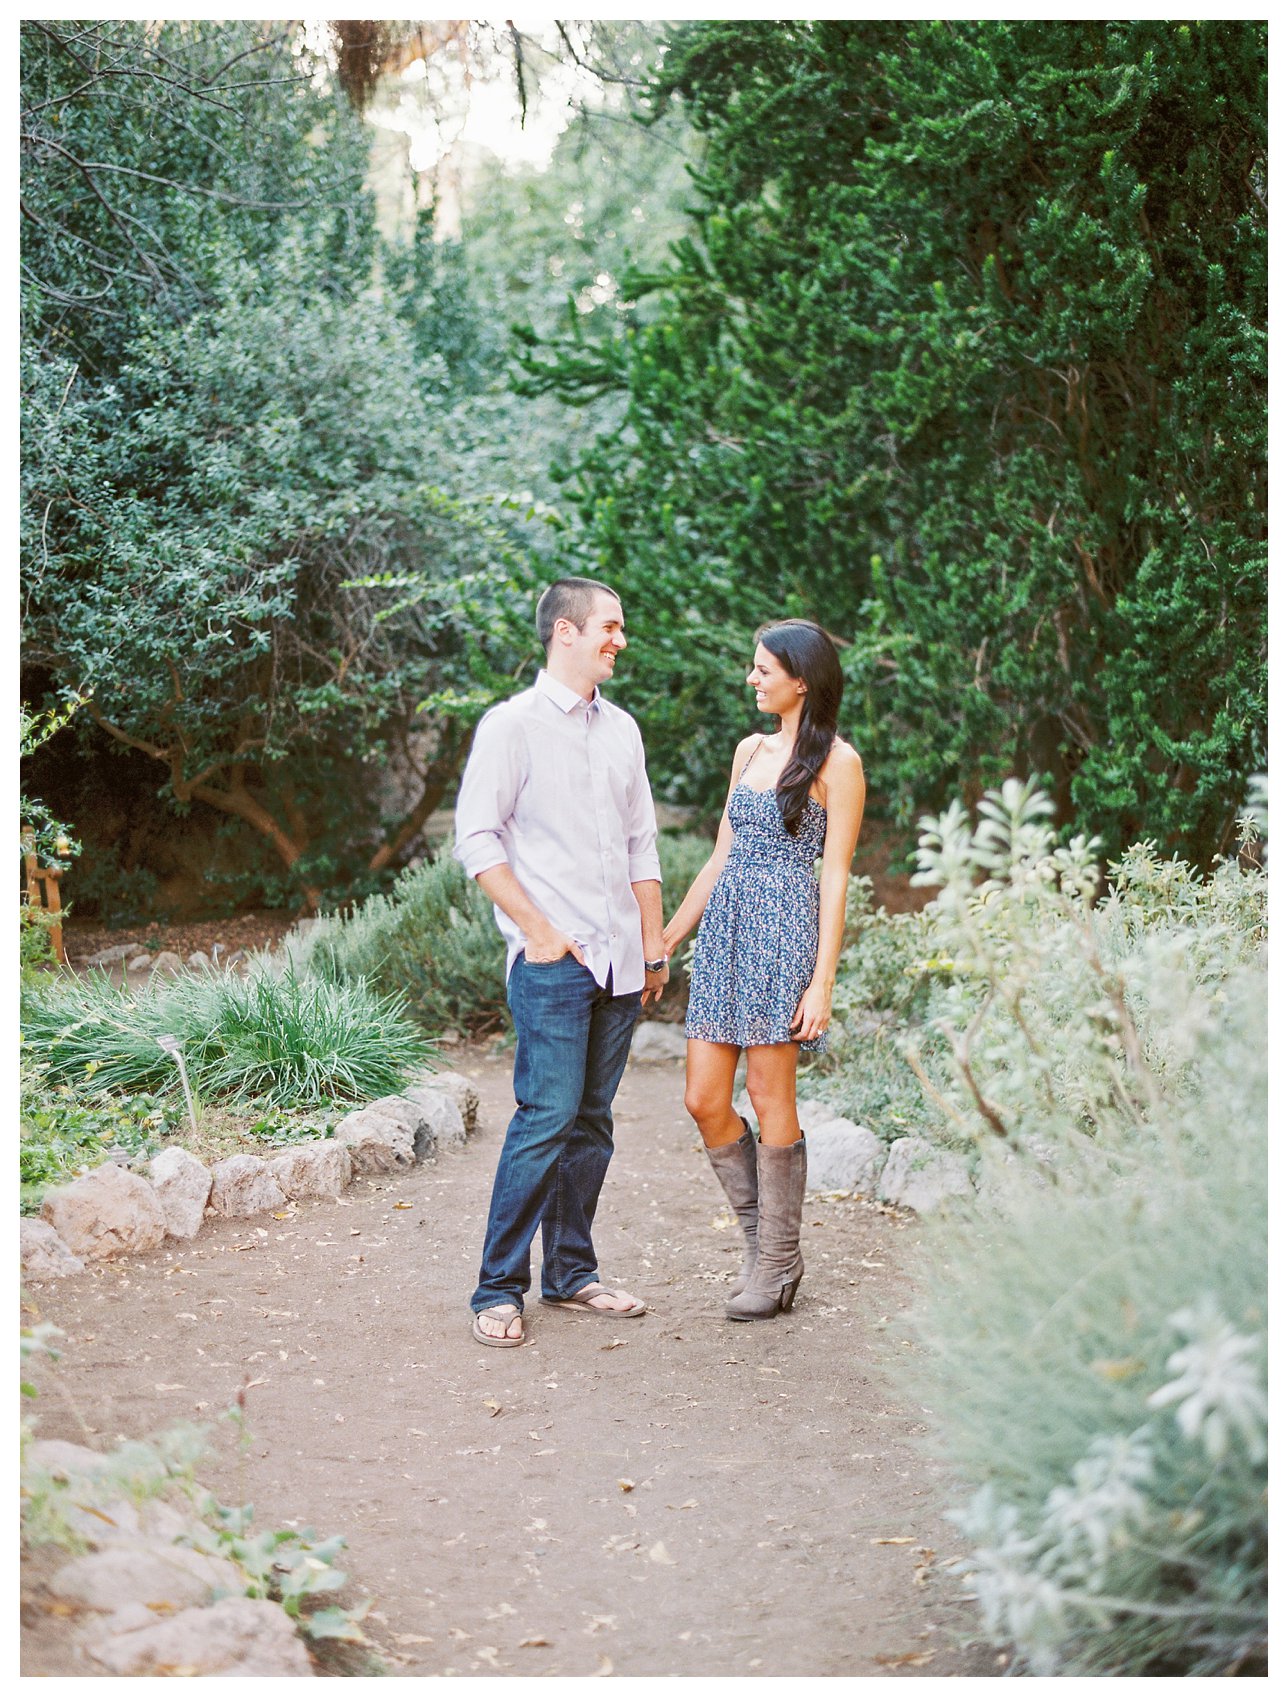 Boyce Thompson Arboretum engagement photos - Scottsdale Wedding Photographer | Rachel Solomon Photography_4711